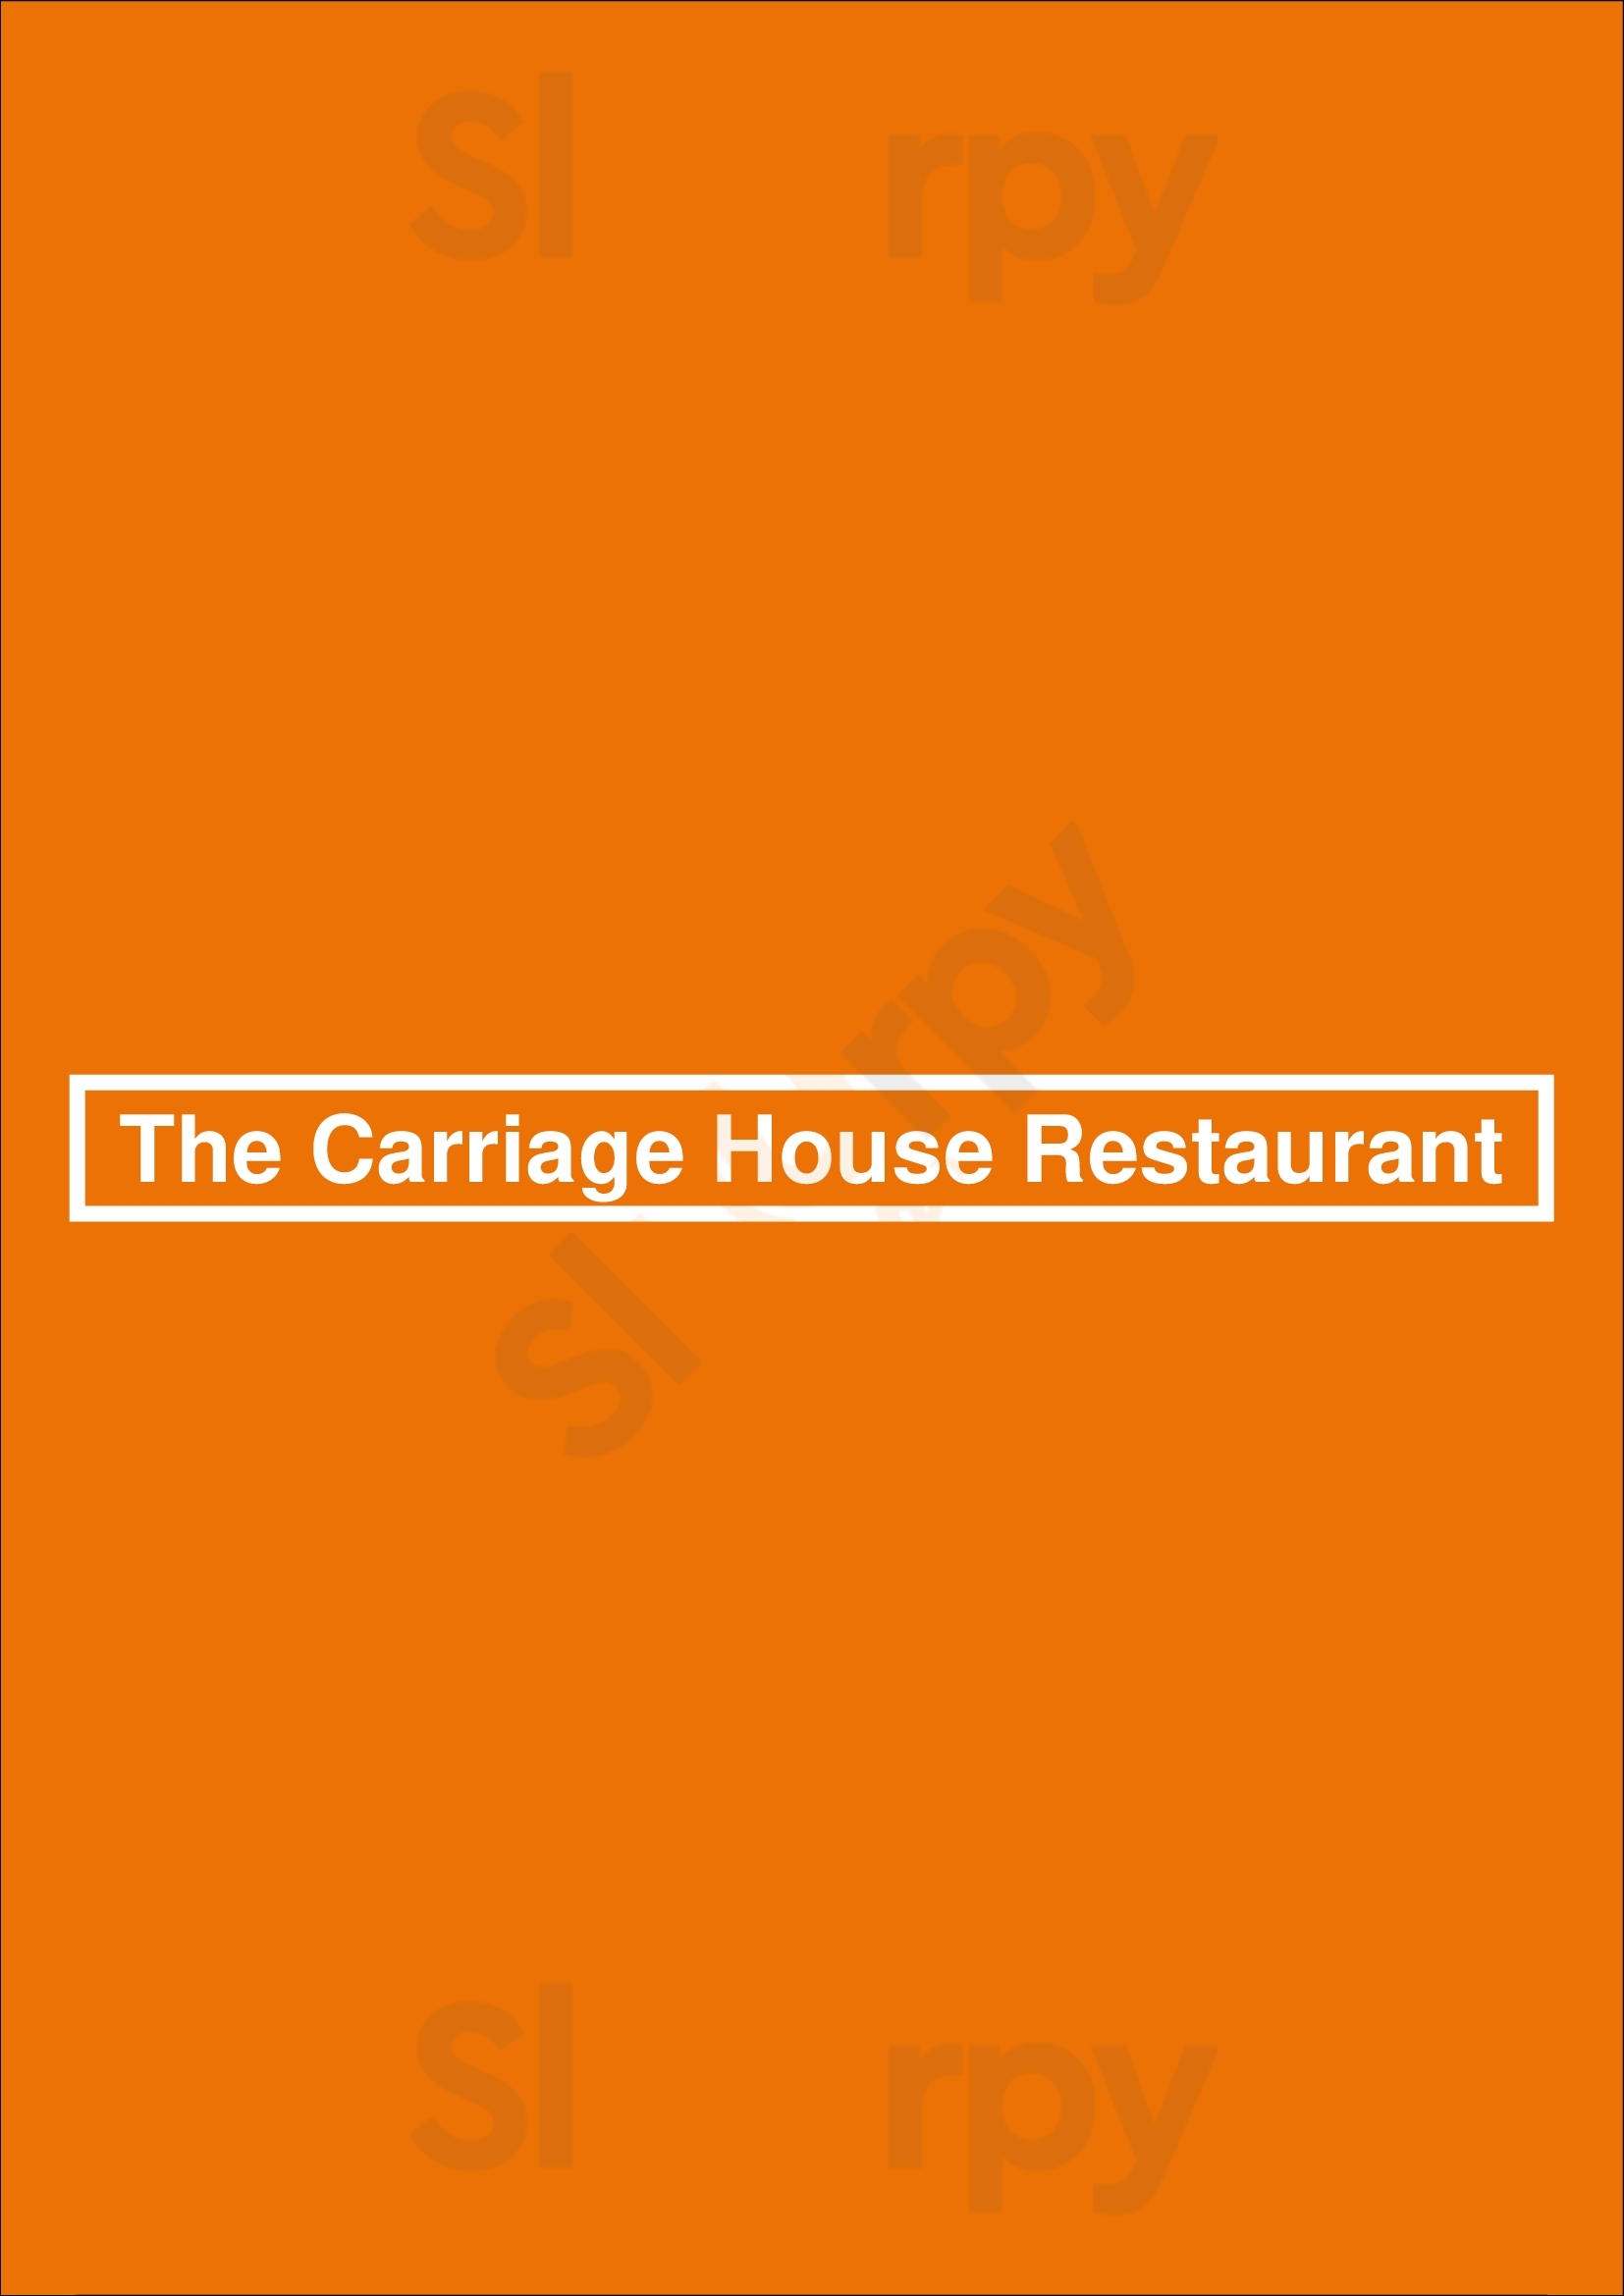 The Carriage House Restaurant Burlington Menu - 1